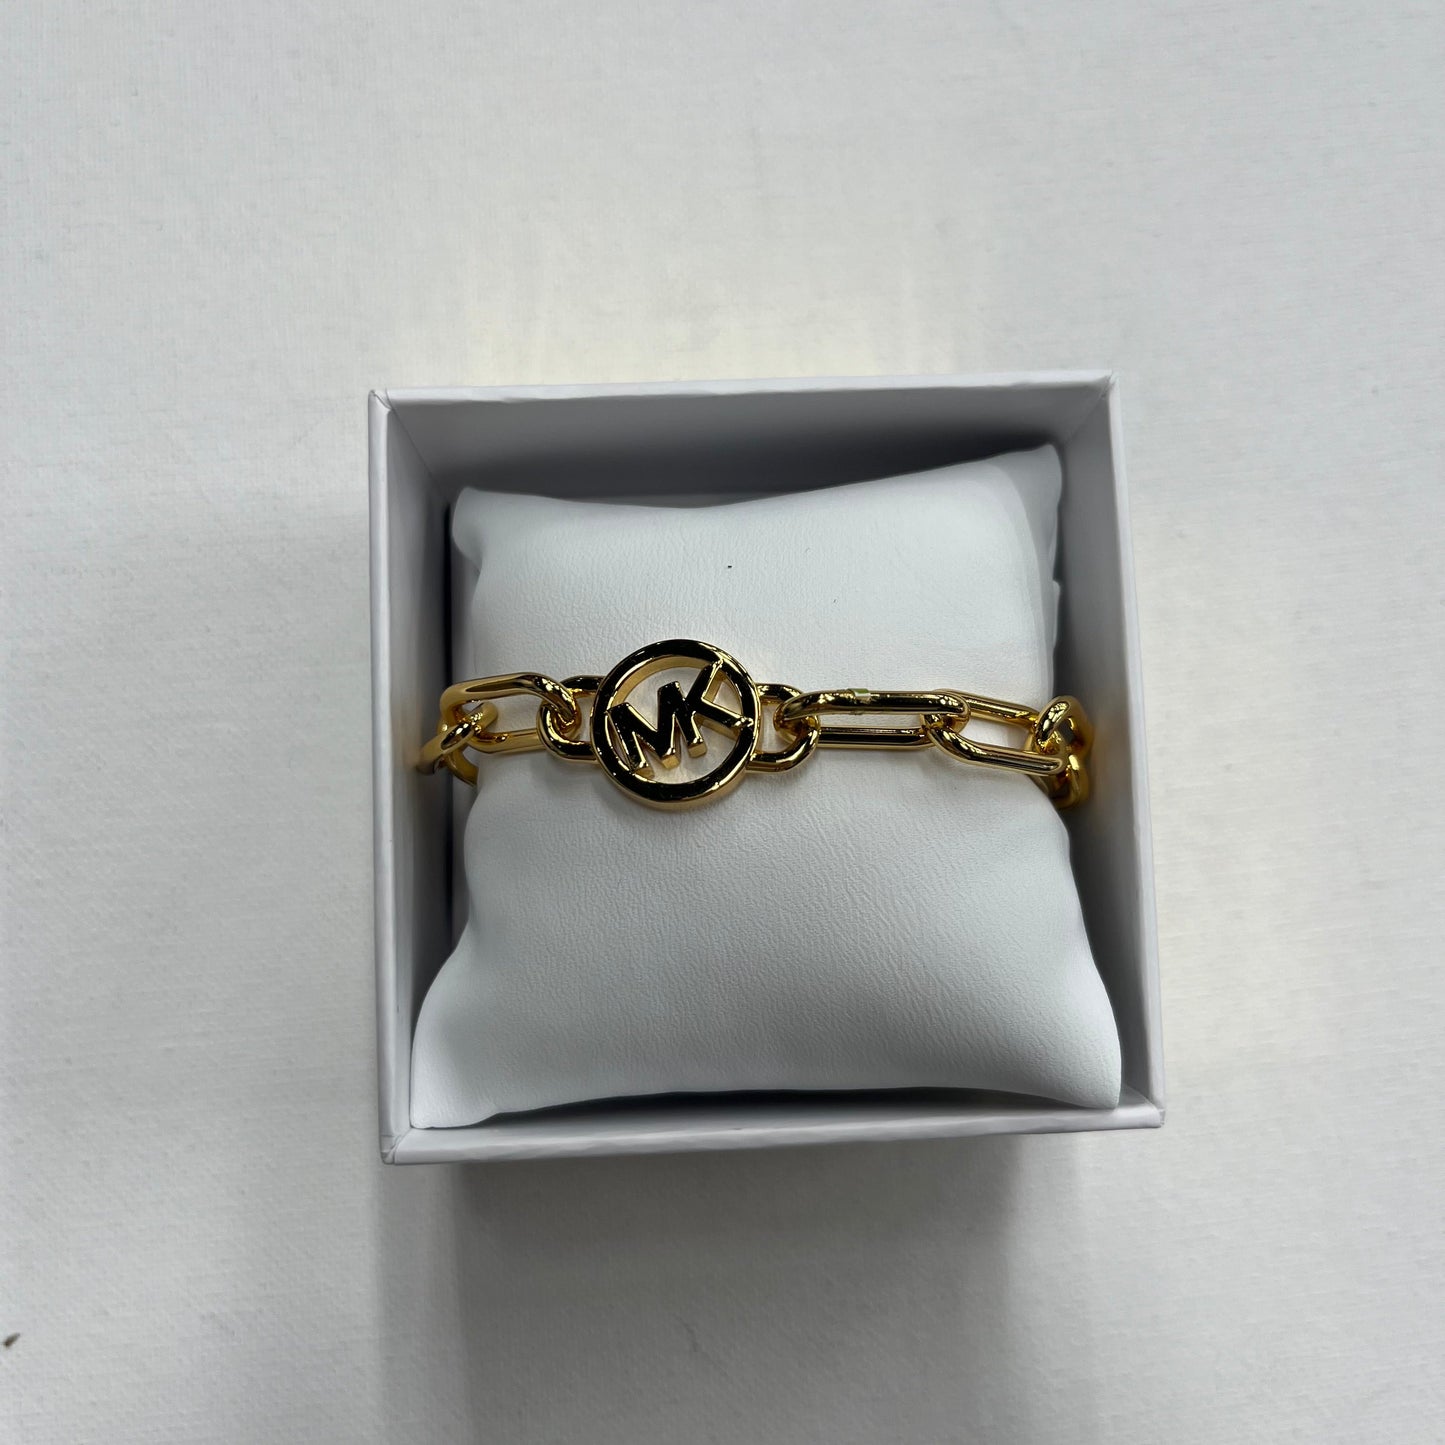 Bracelet Chain By Michael Kors NWT